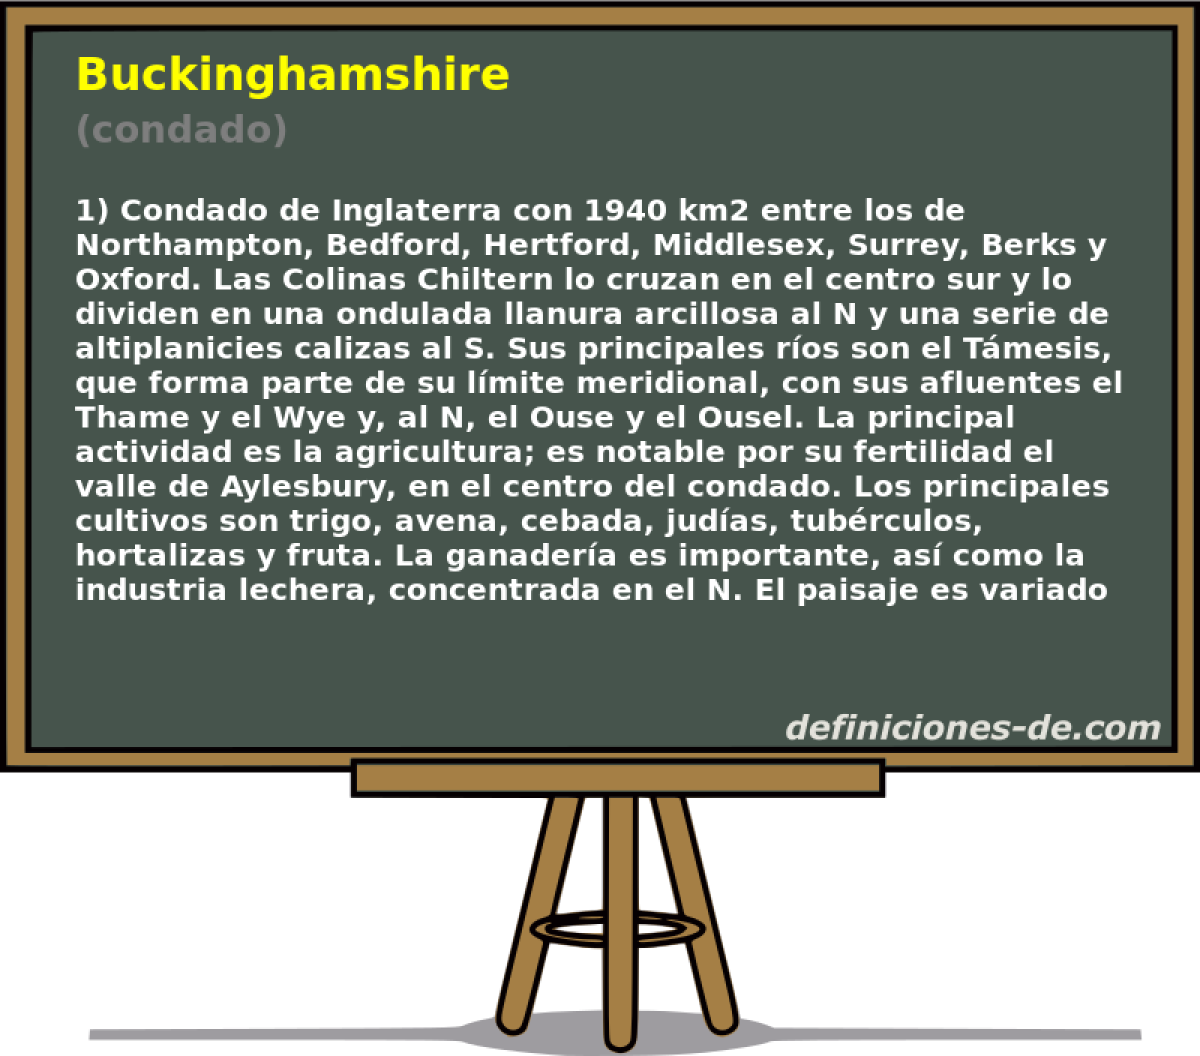 Buckinghamshire (condado)